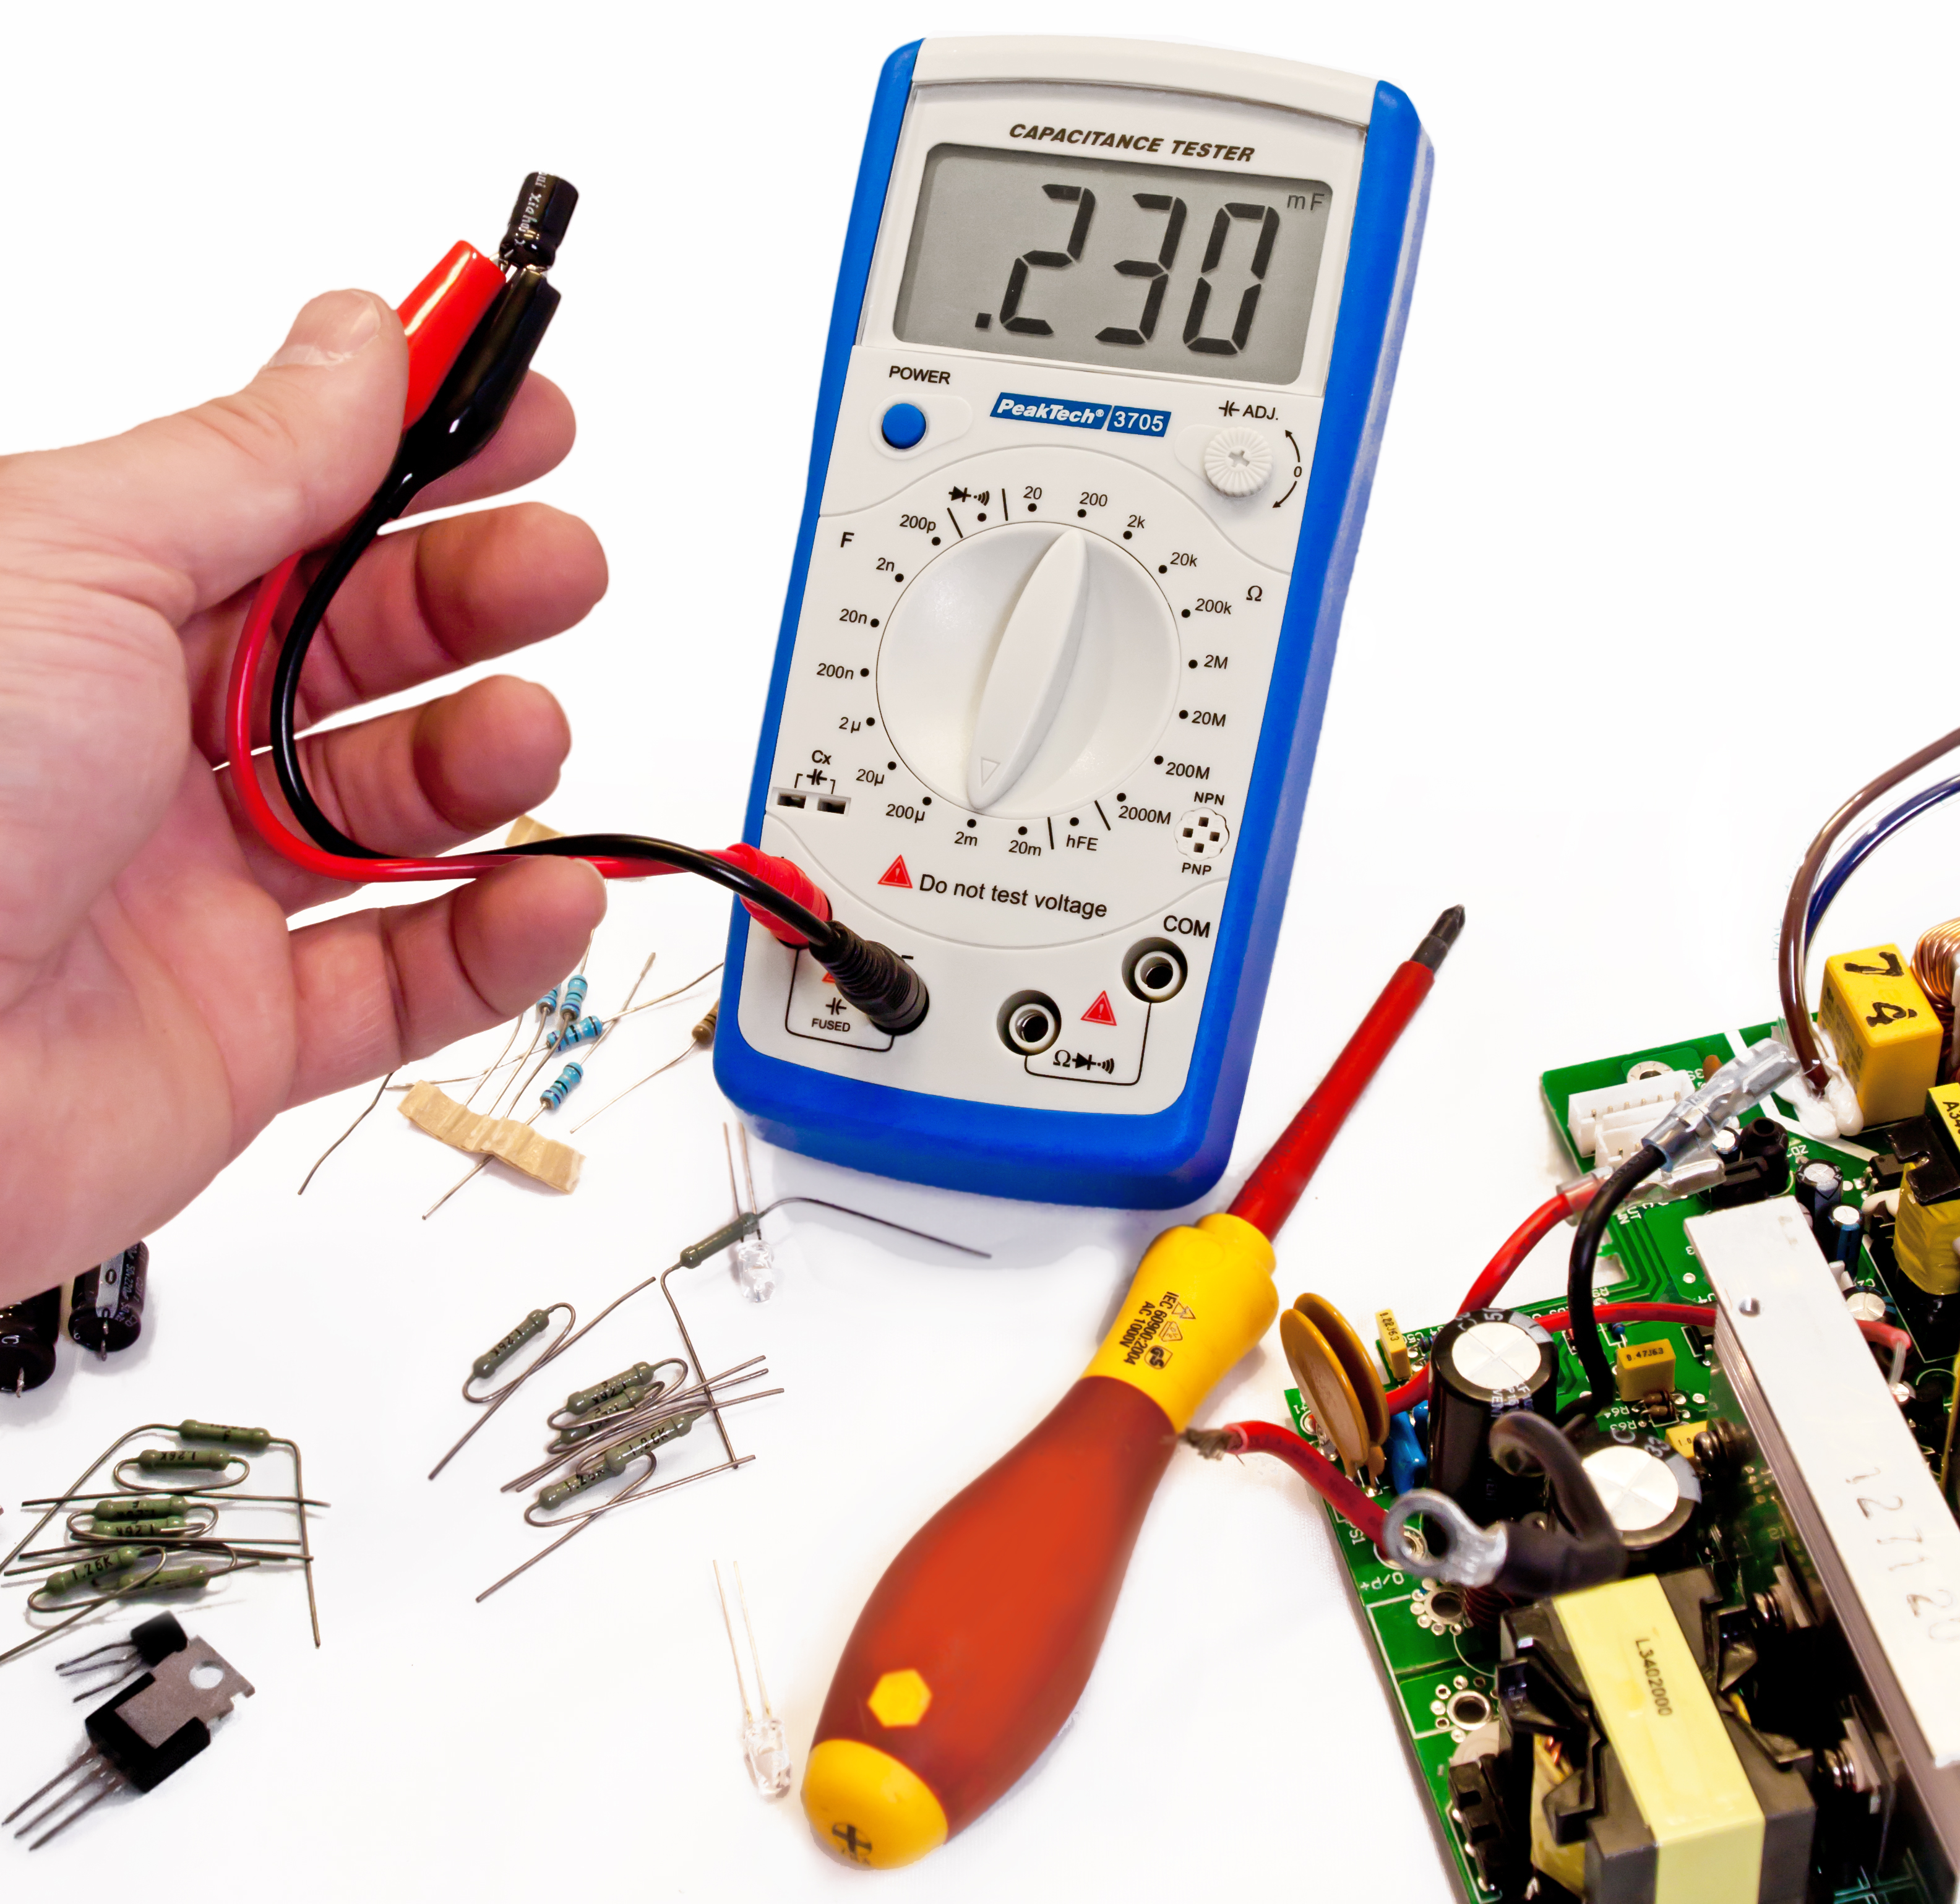 «PeakTech® P 3705» Digital capacitance meter